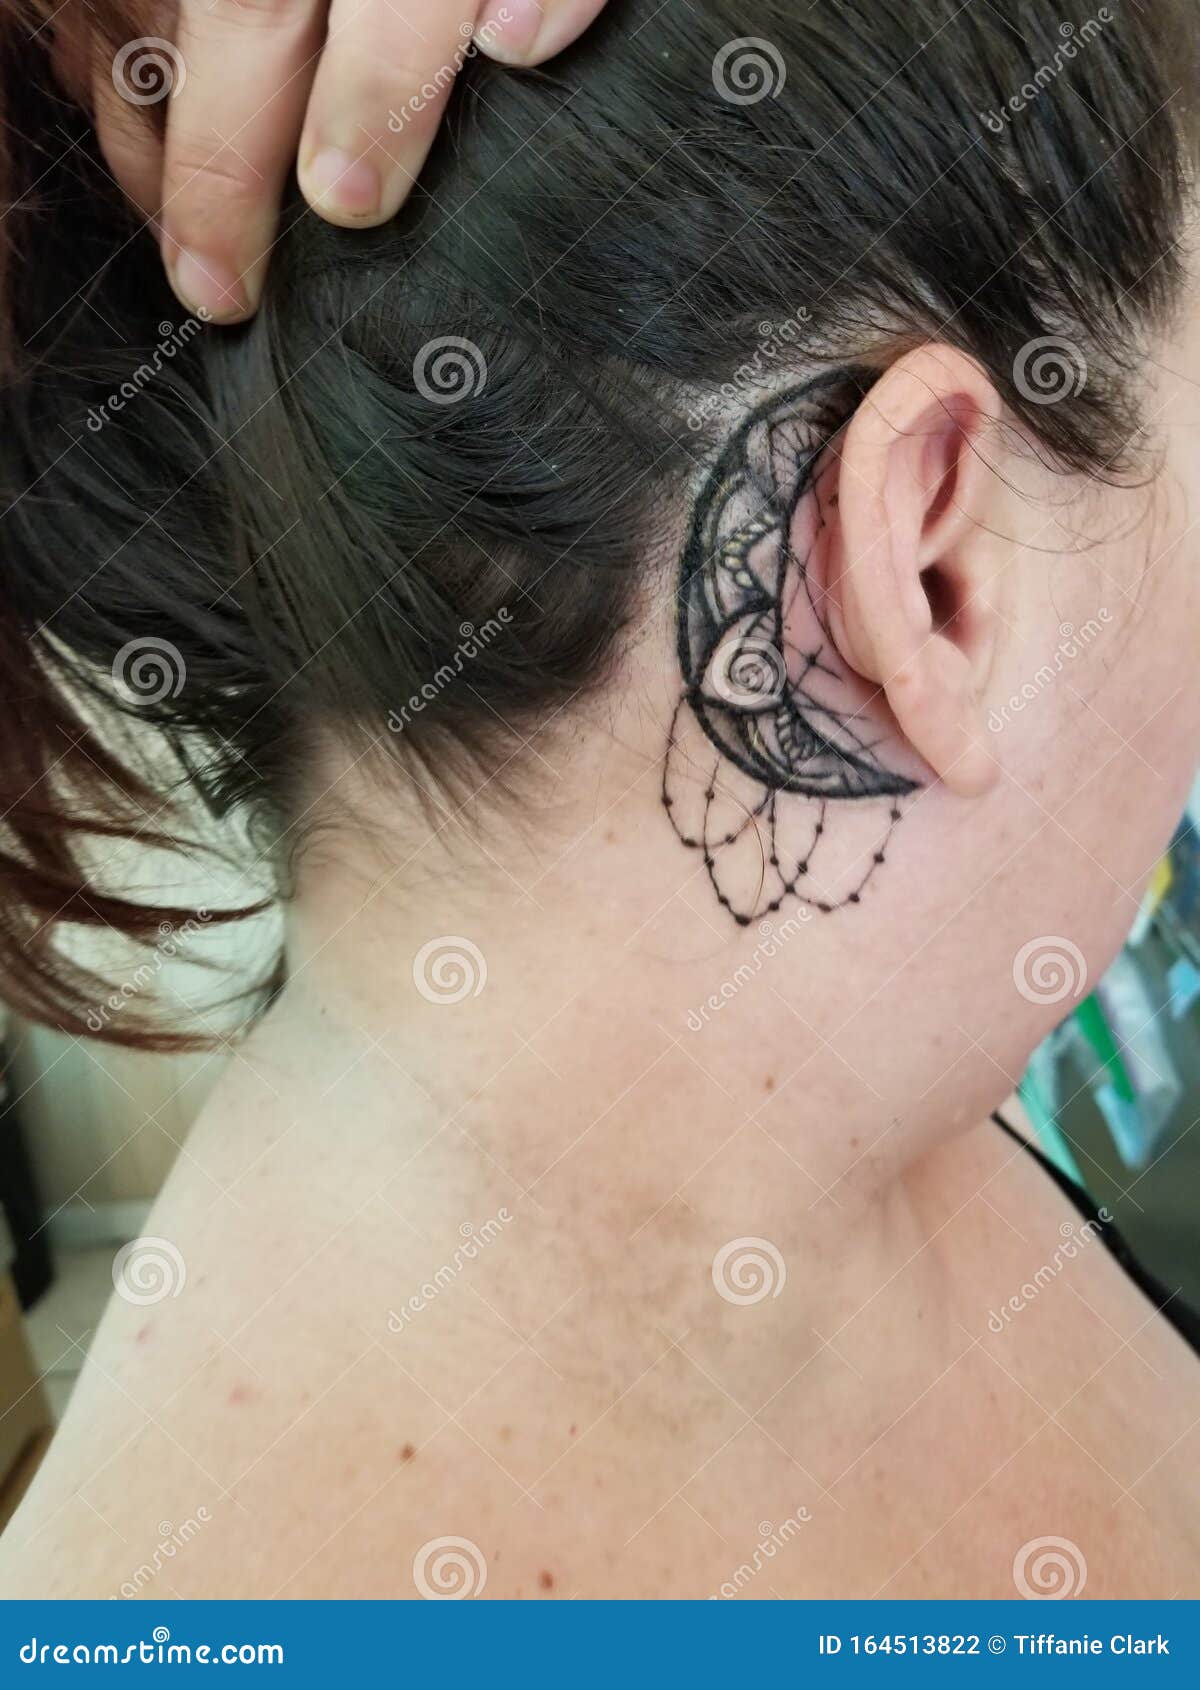 neck tattoos men blackTikTok Search